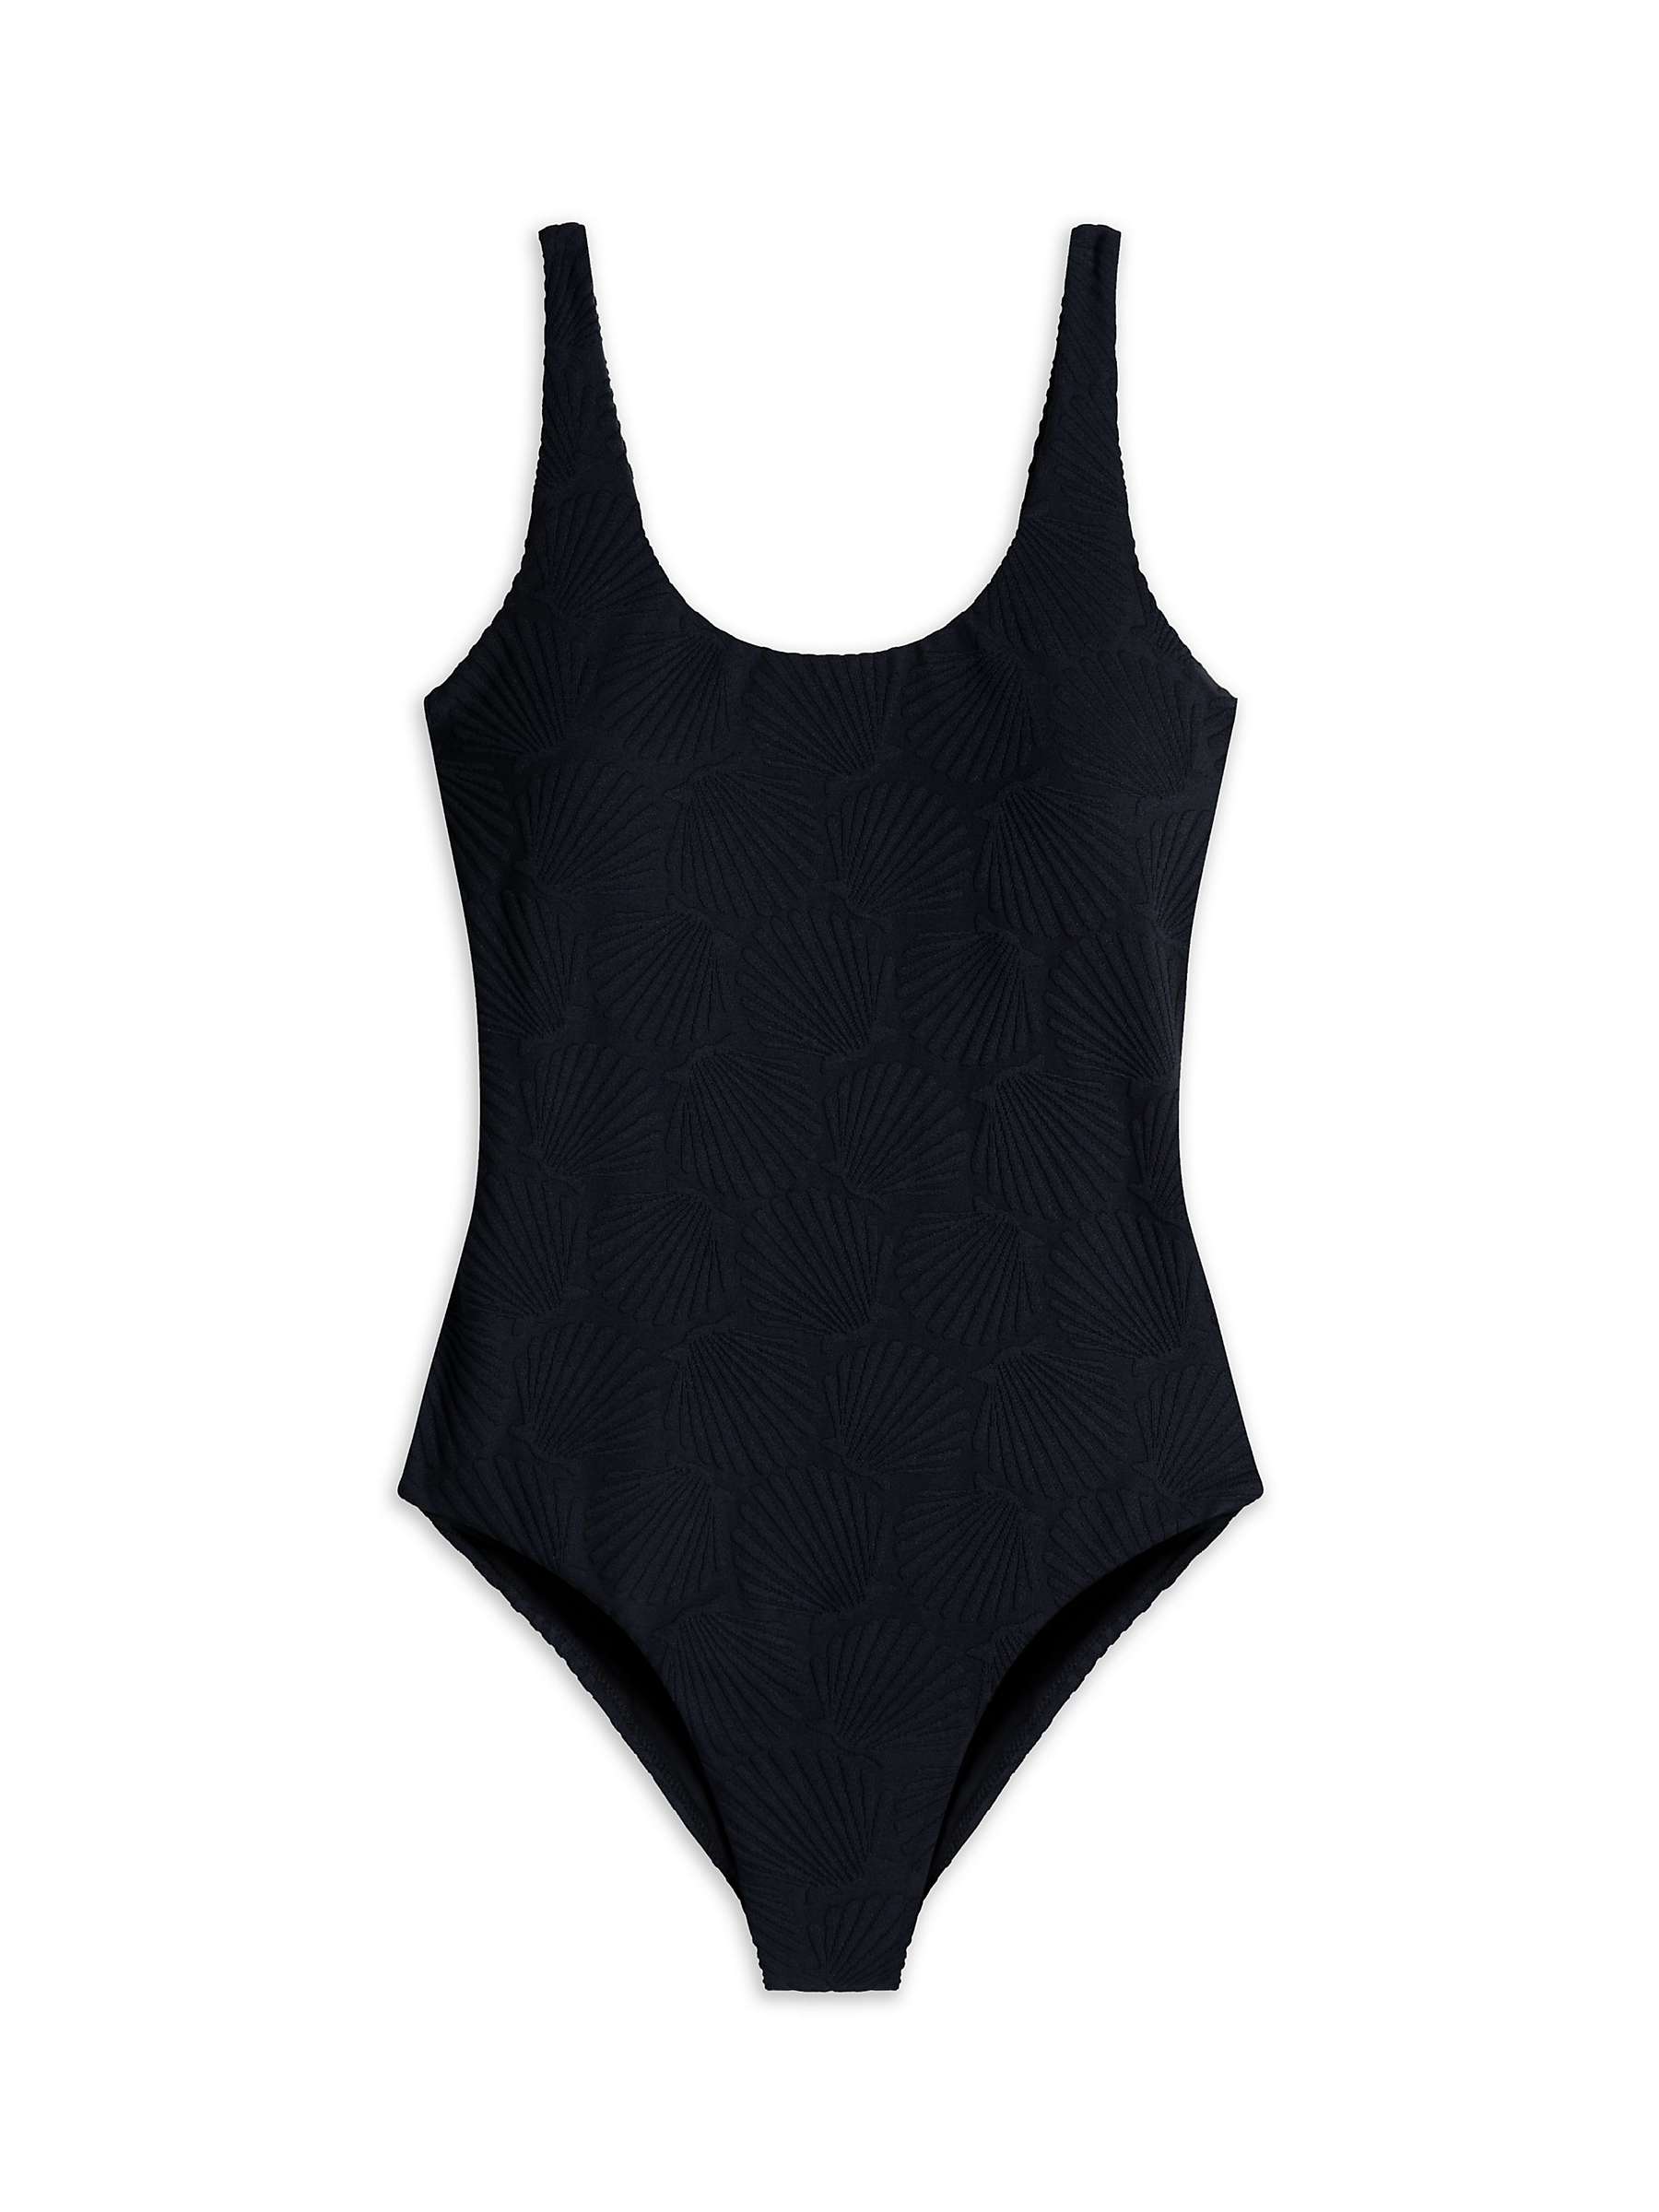 Buy Chelsea Peers Jacquard Shell Swimsuit, Black Online at johnlewis.com